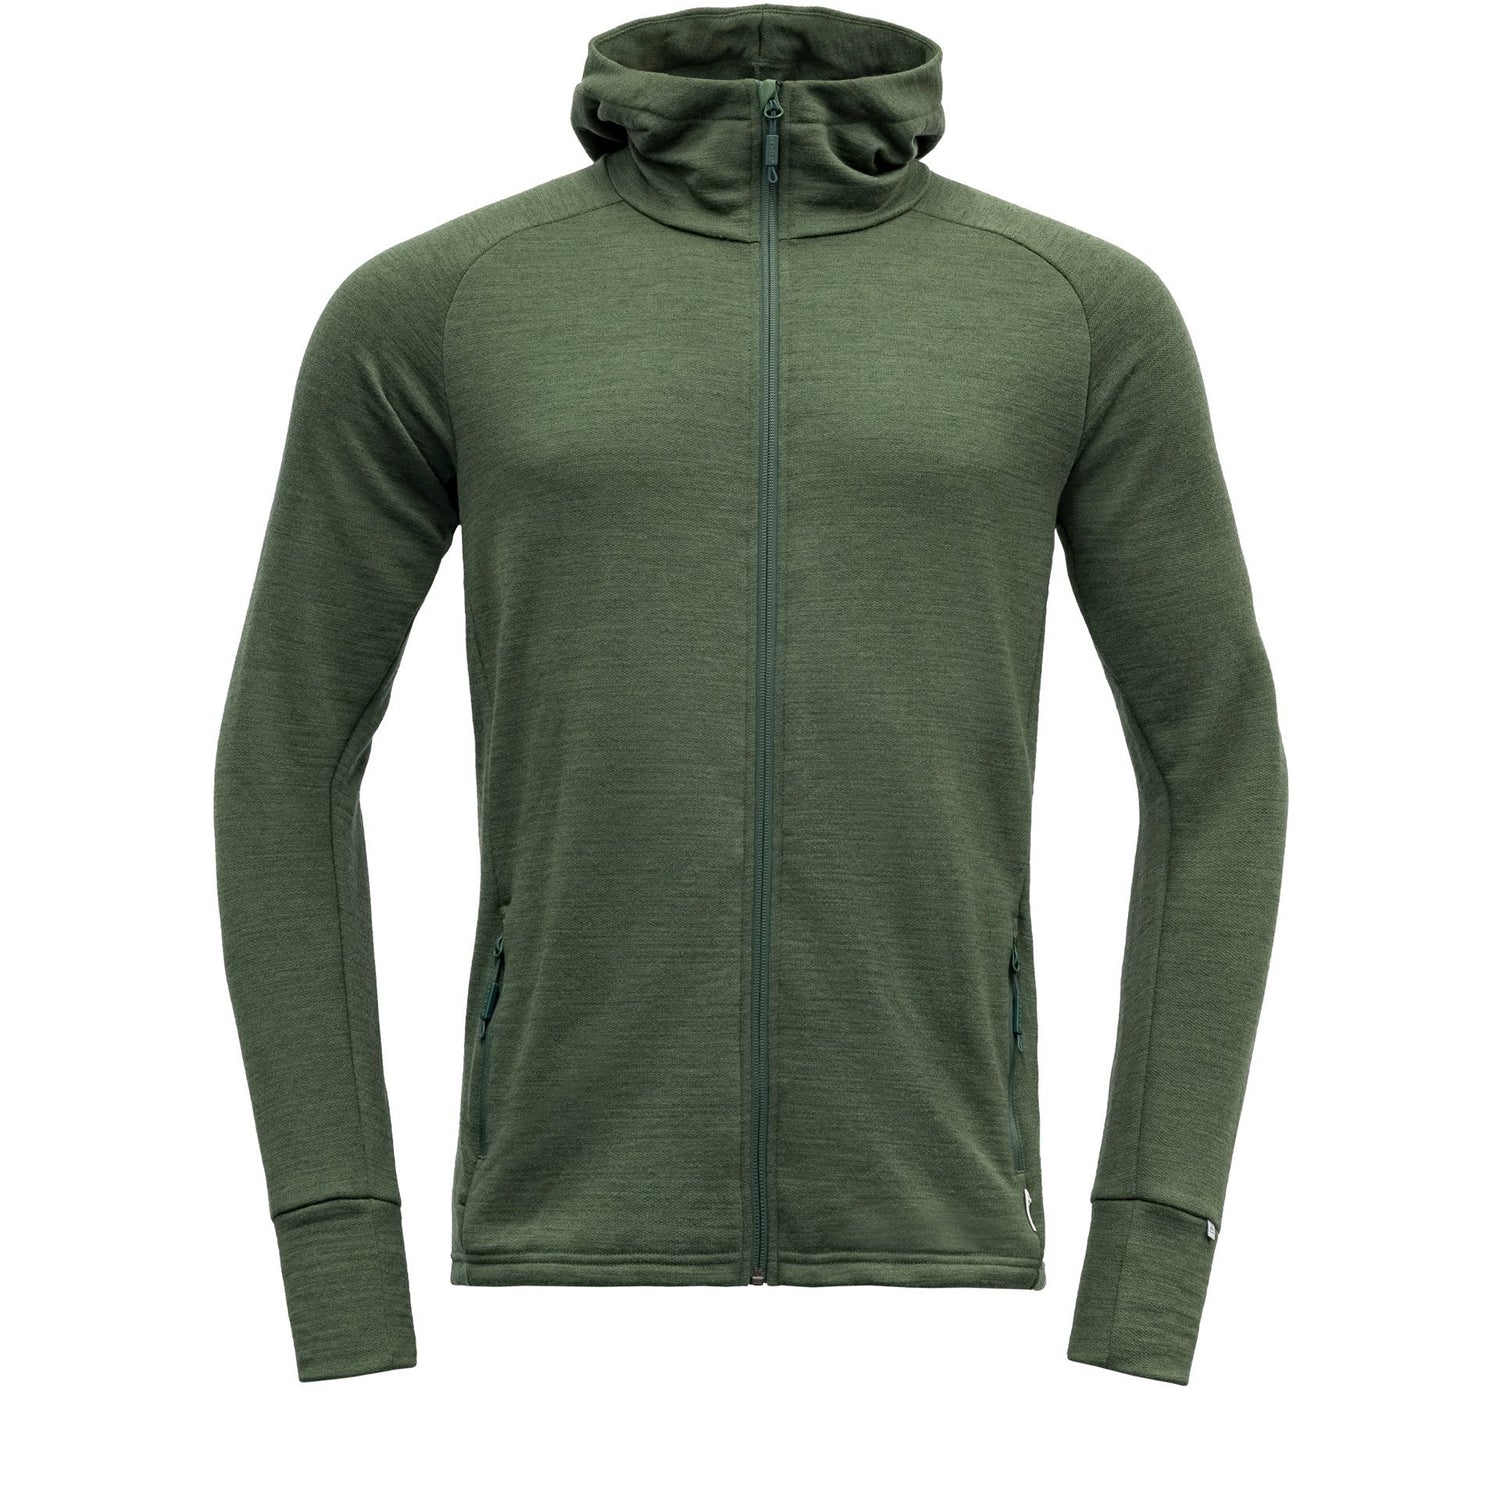 Devold M's Nibba Jacket with Hood - 100% Merino Wool Forest Melange Shirt